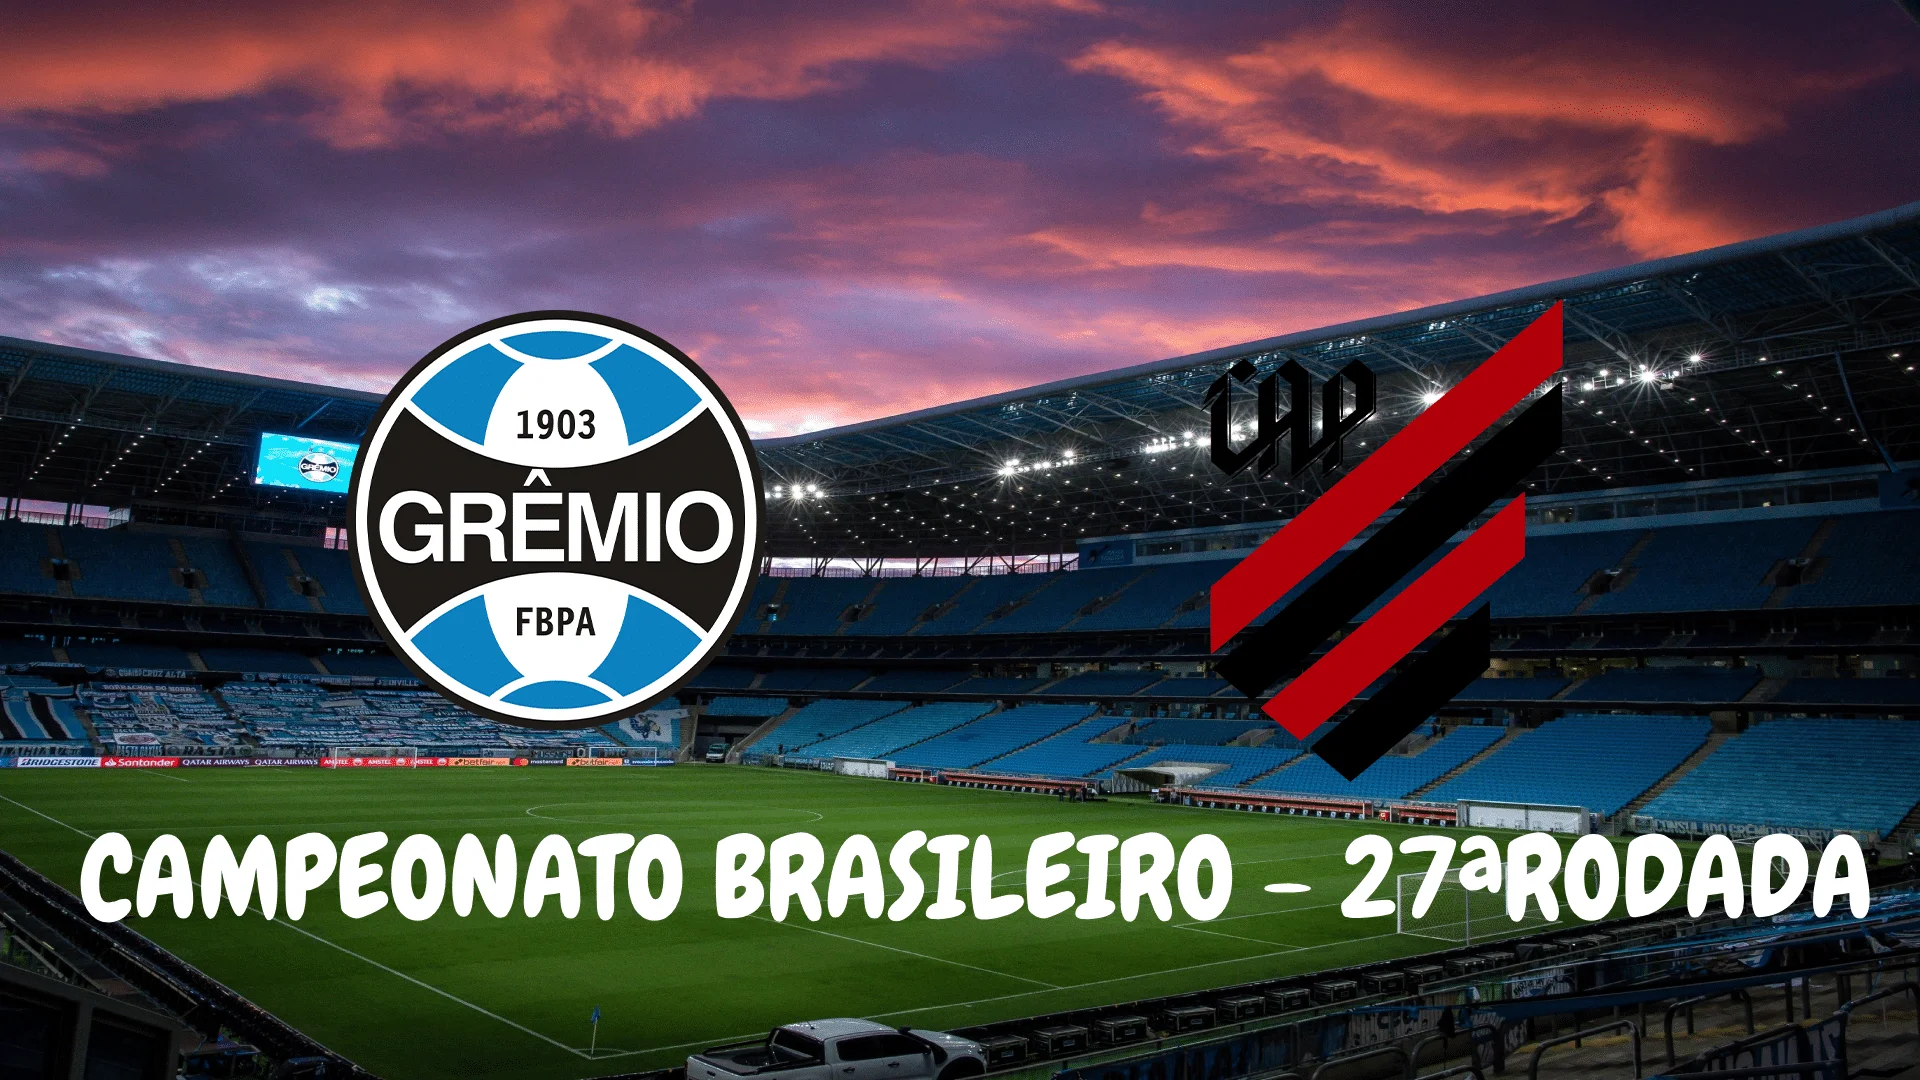 Grêmio vs Caxias: A Rivalry on the Field